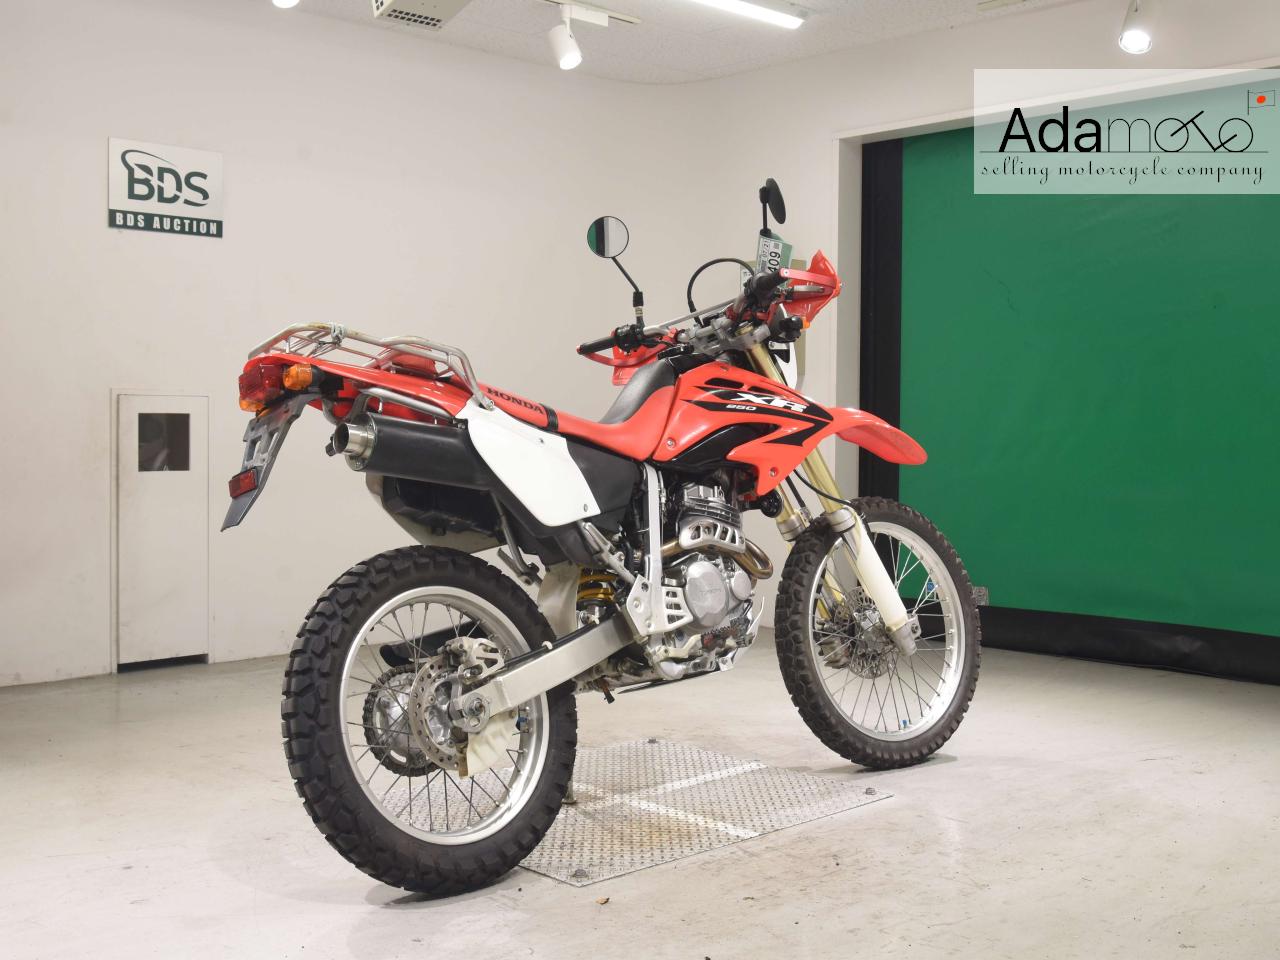 Honda XR250 2 - Adamoto - Motorcycles from Japan